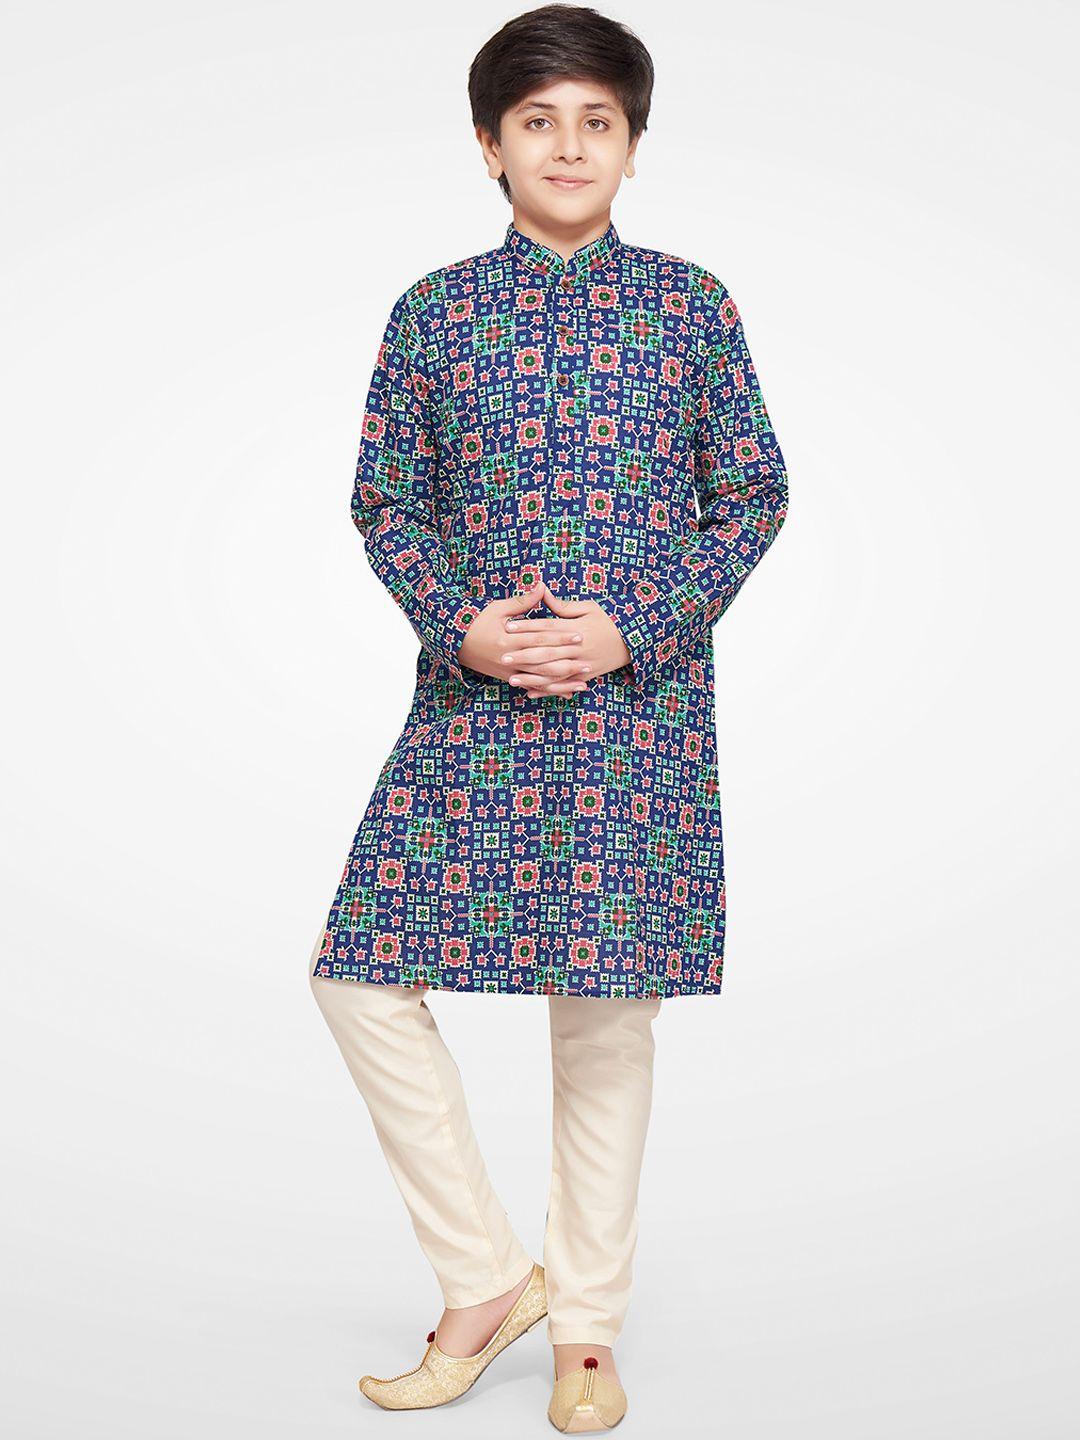 jeetethnics boys blue & cream-coloured ethnic motifs printed kurta with pyjamas